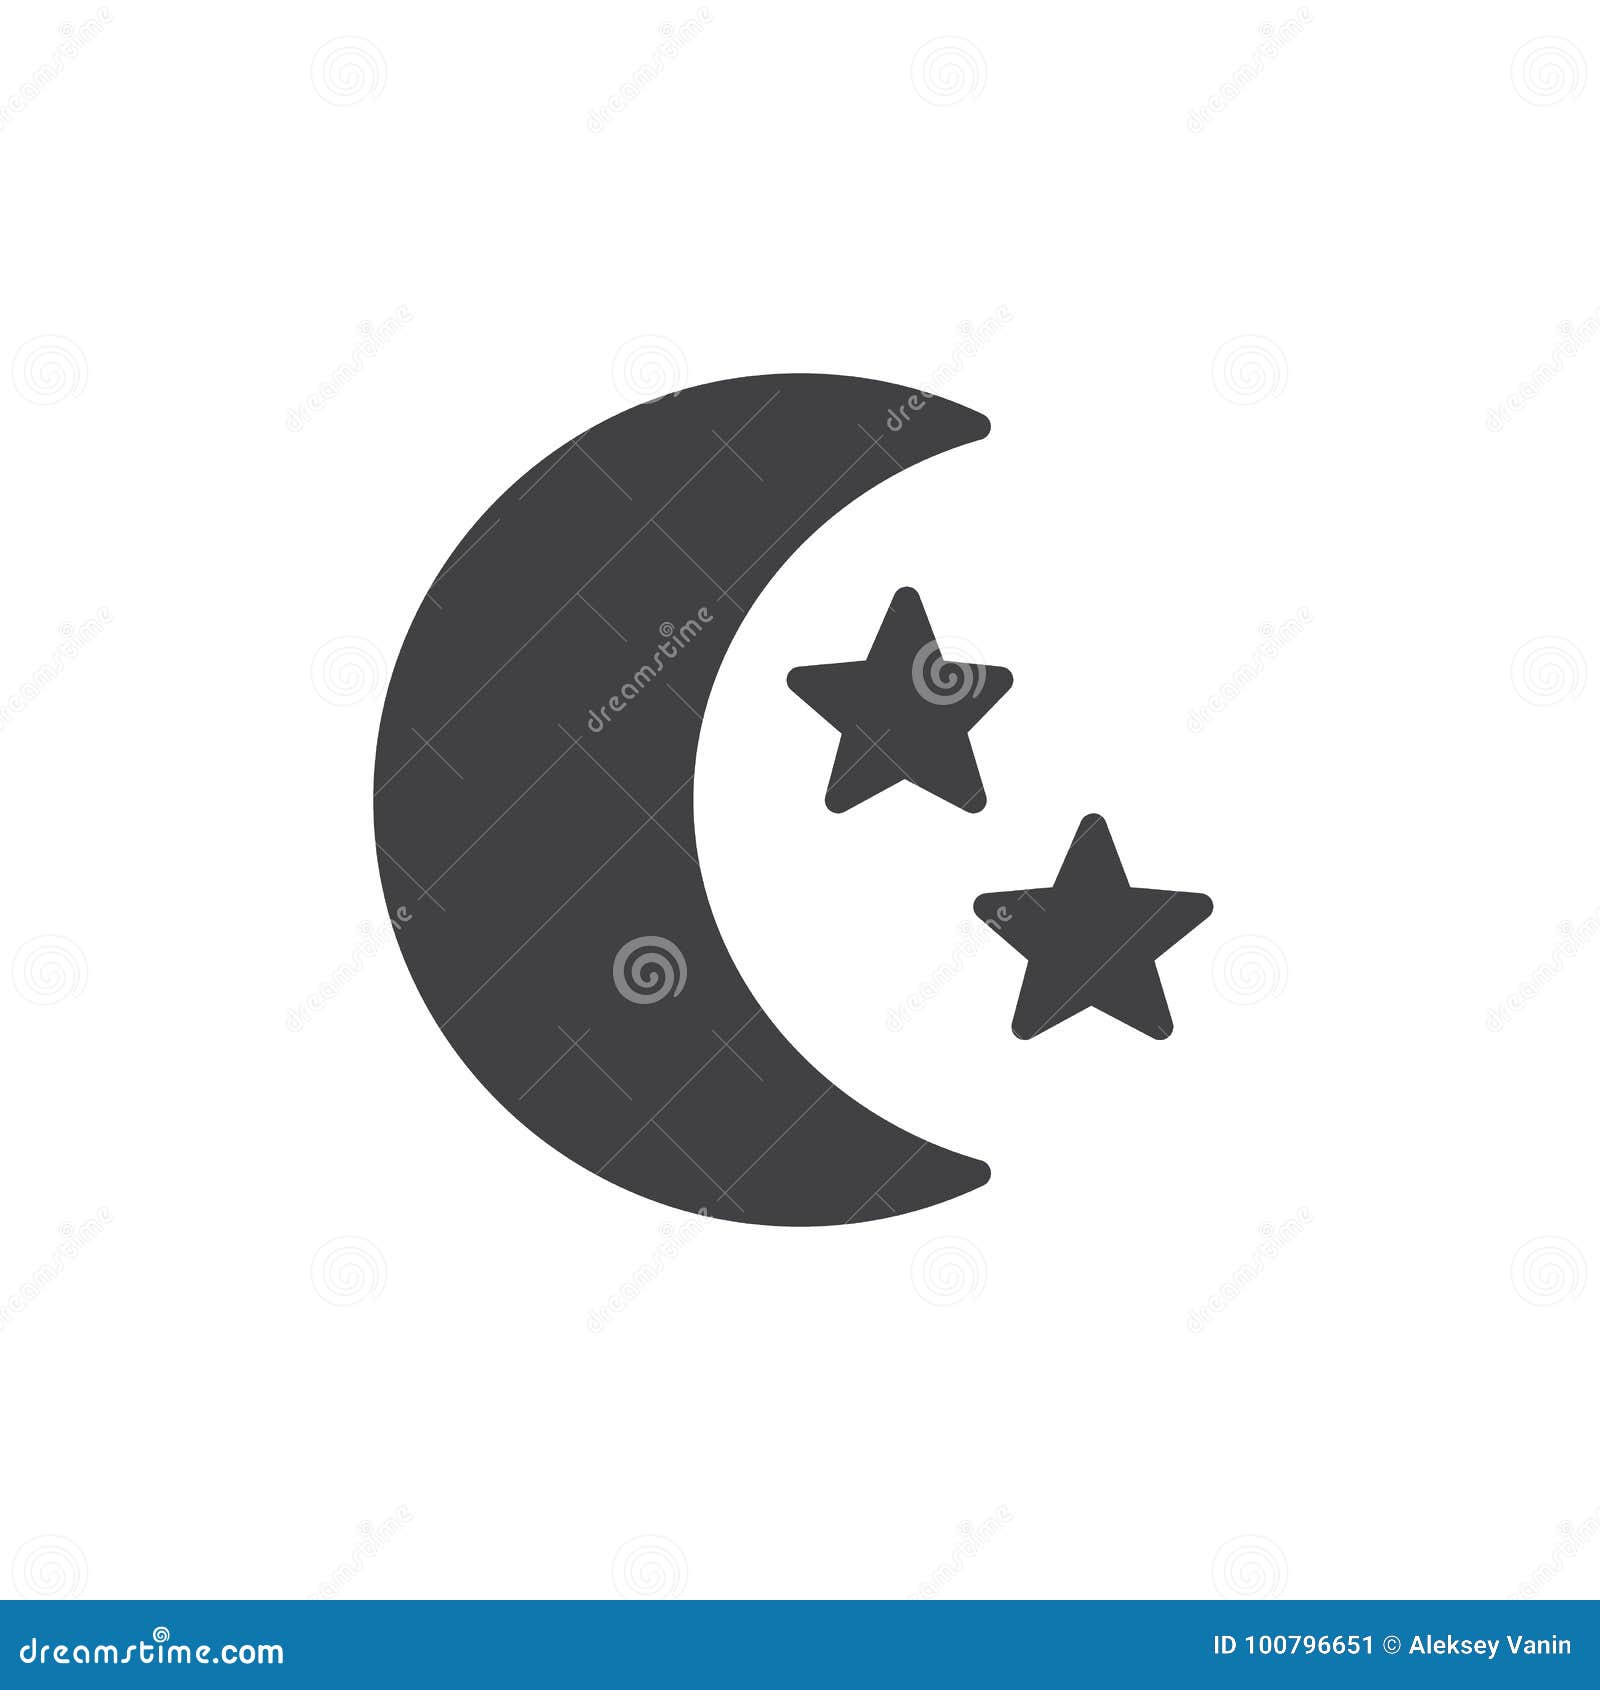 Premium Vector  Pixel art moon and stars. vector illustration